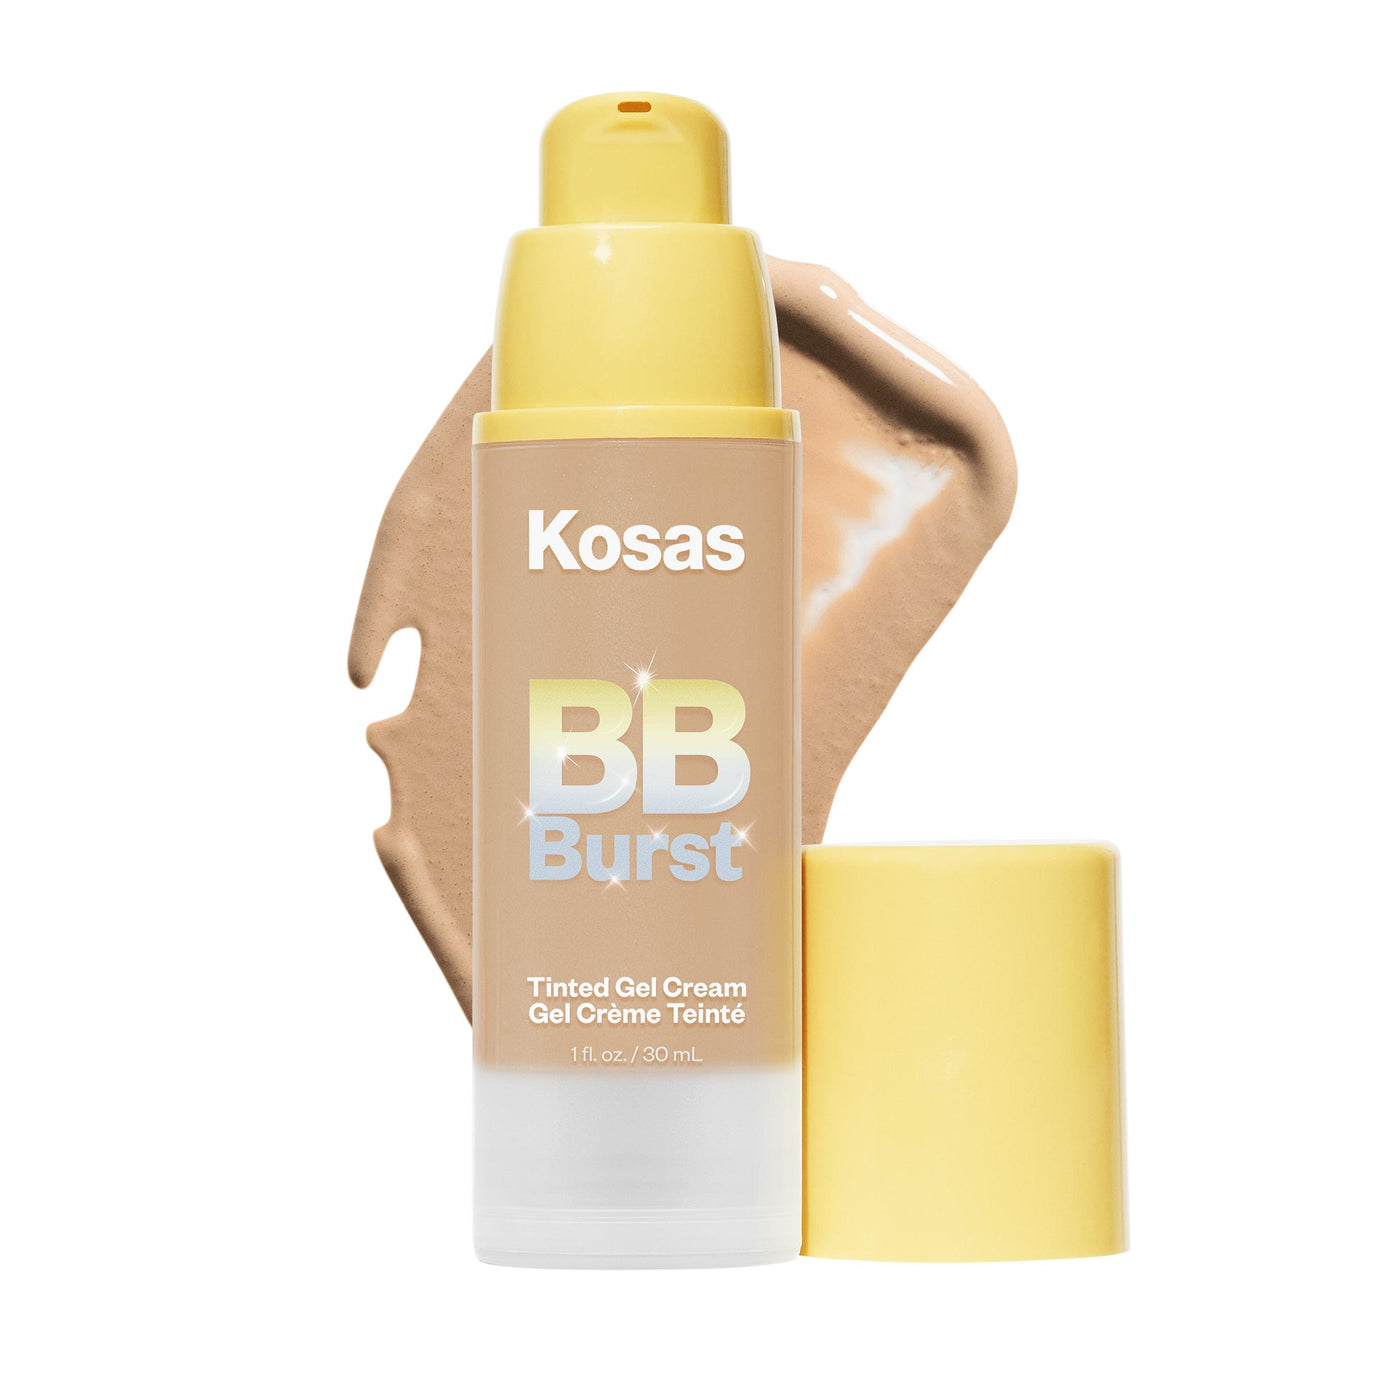 Kosas BB Burst Tinted Gel Cream 25